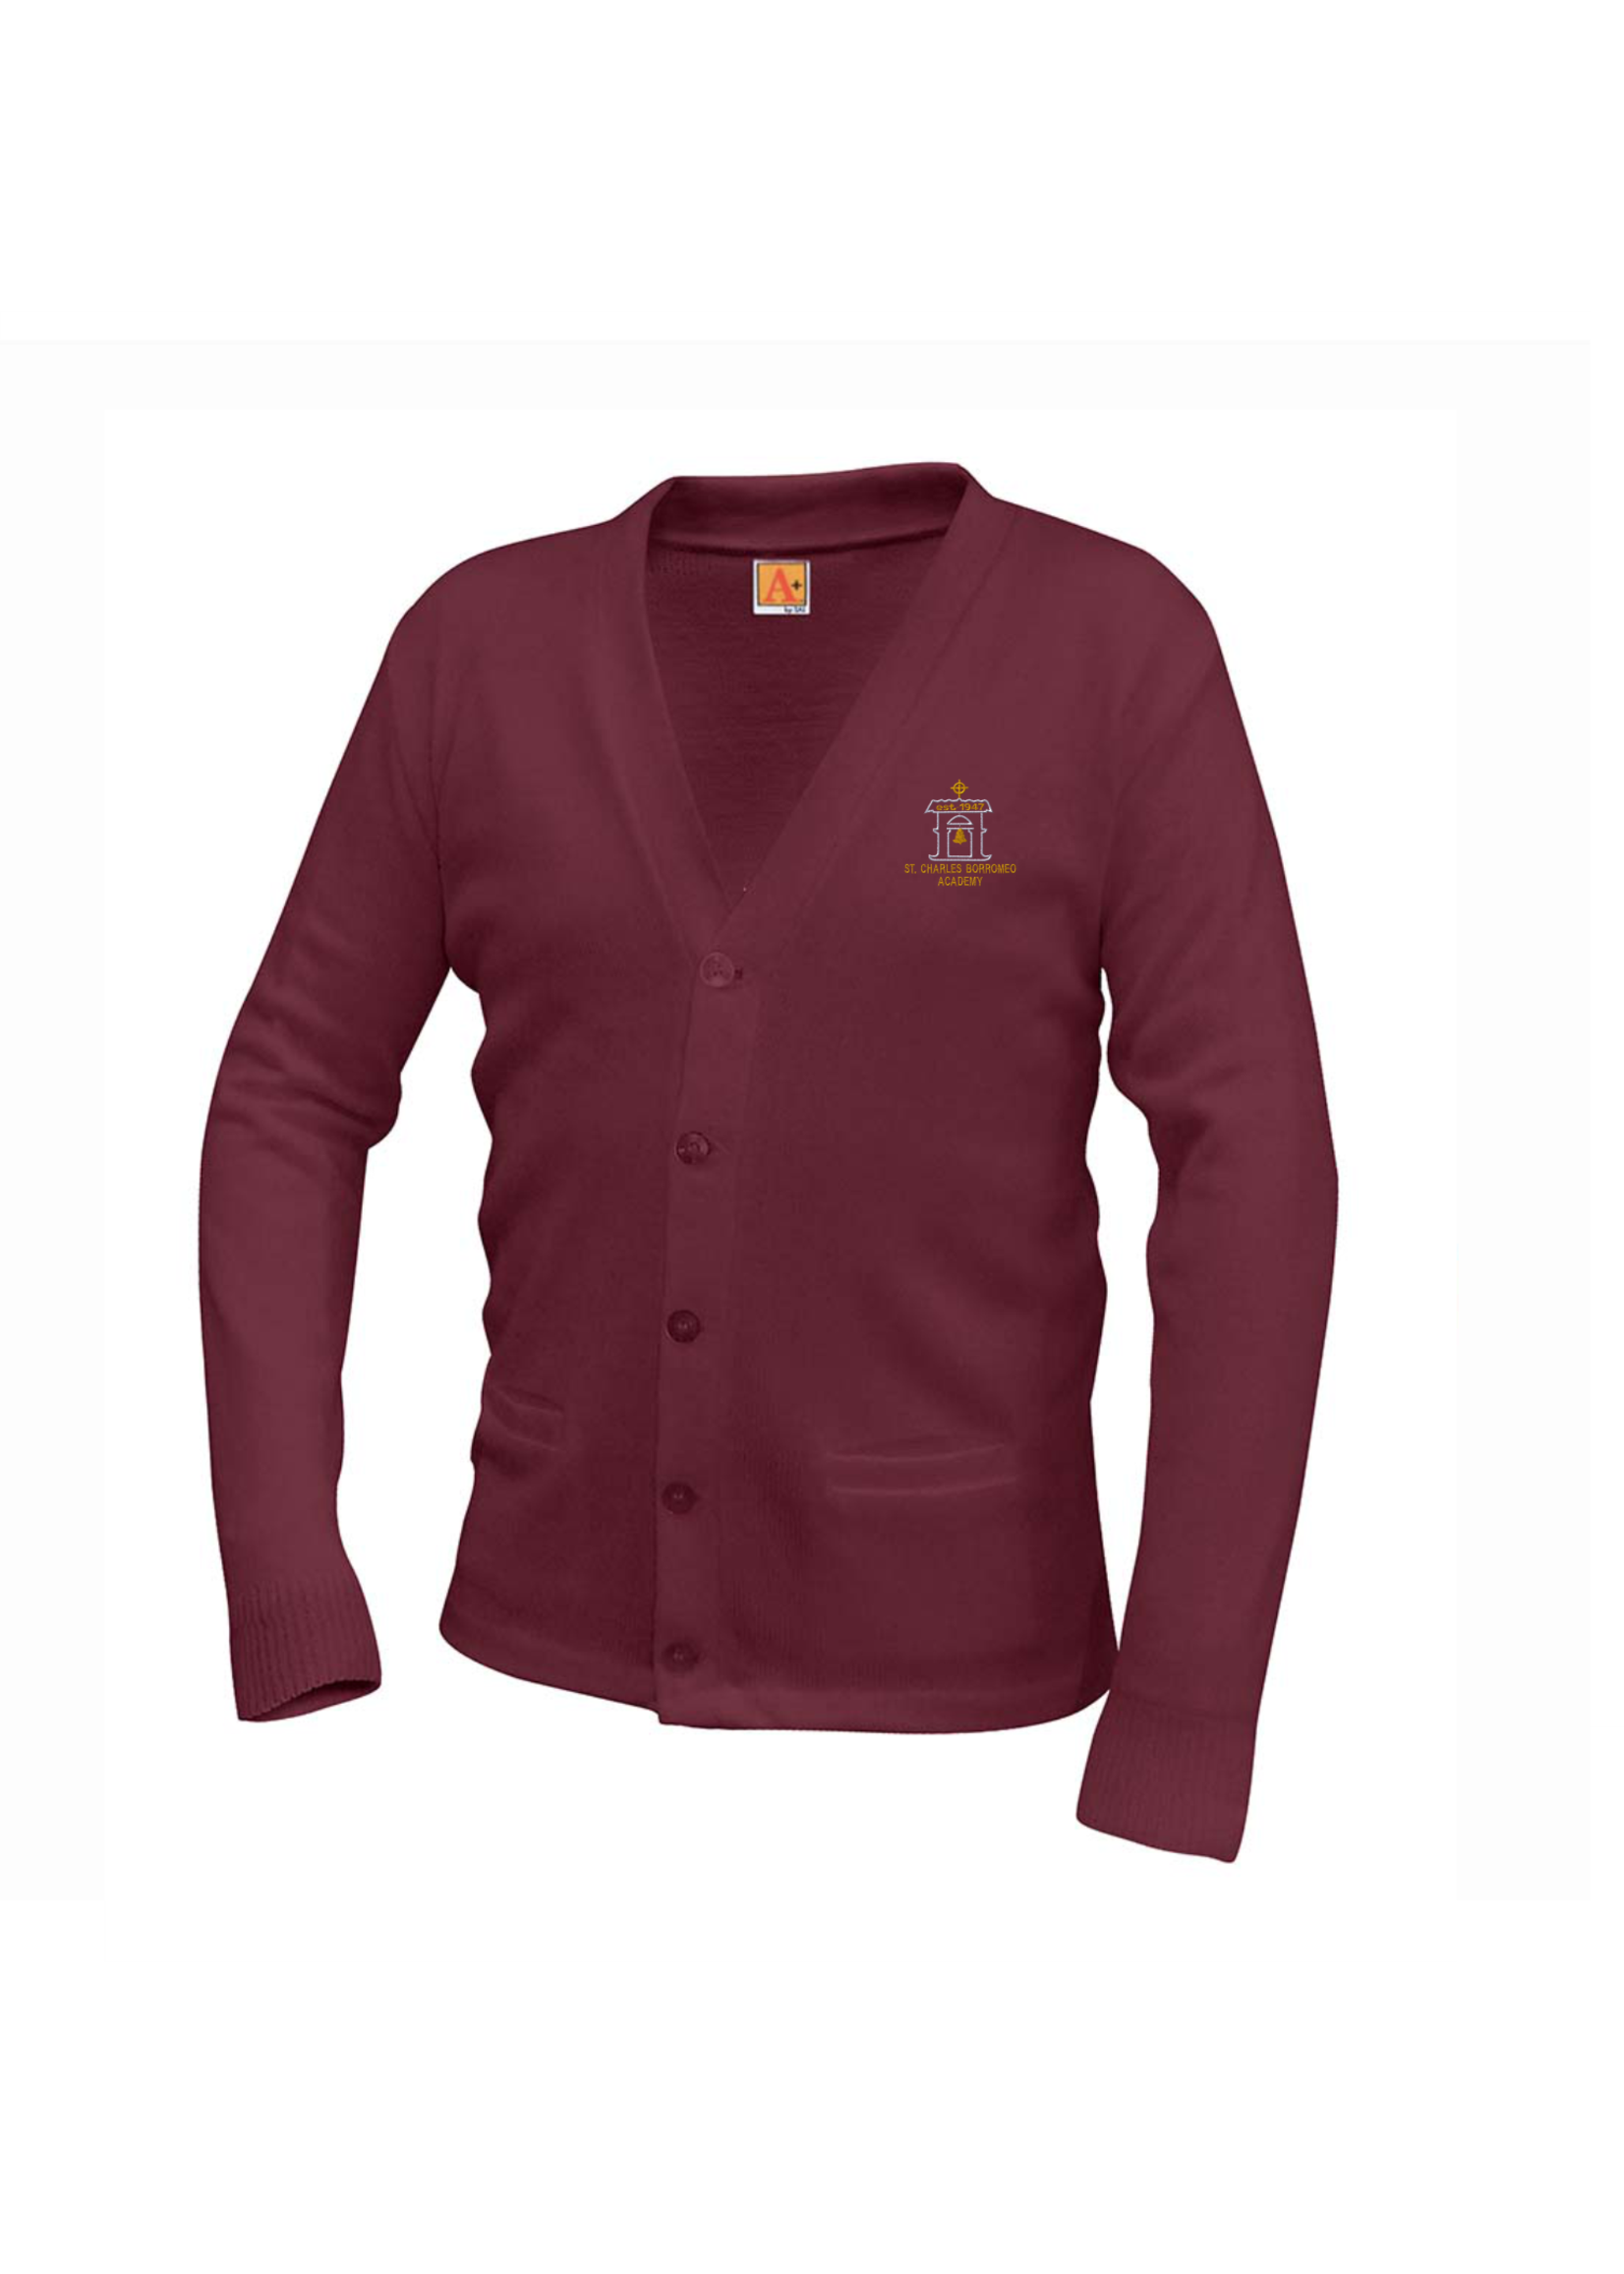 SCBA Wine V-neck cardigan sweater with pockets